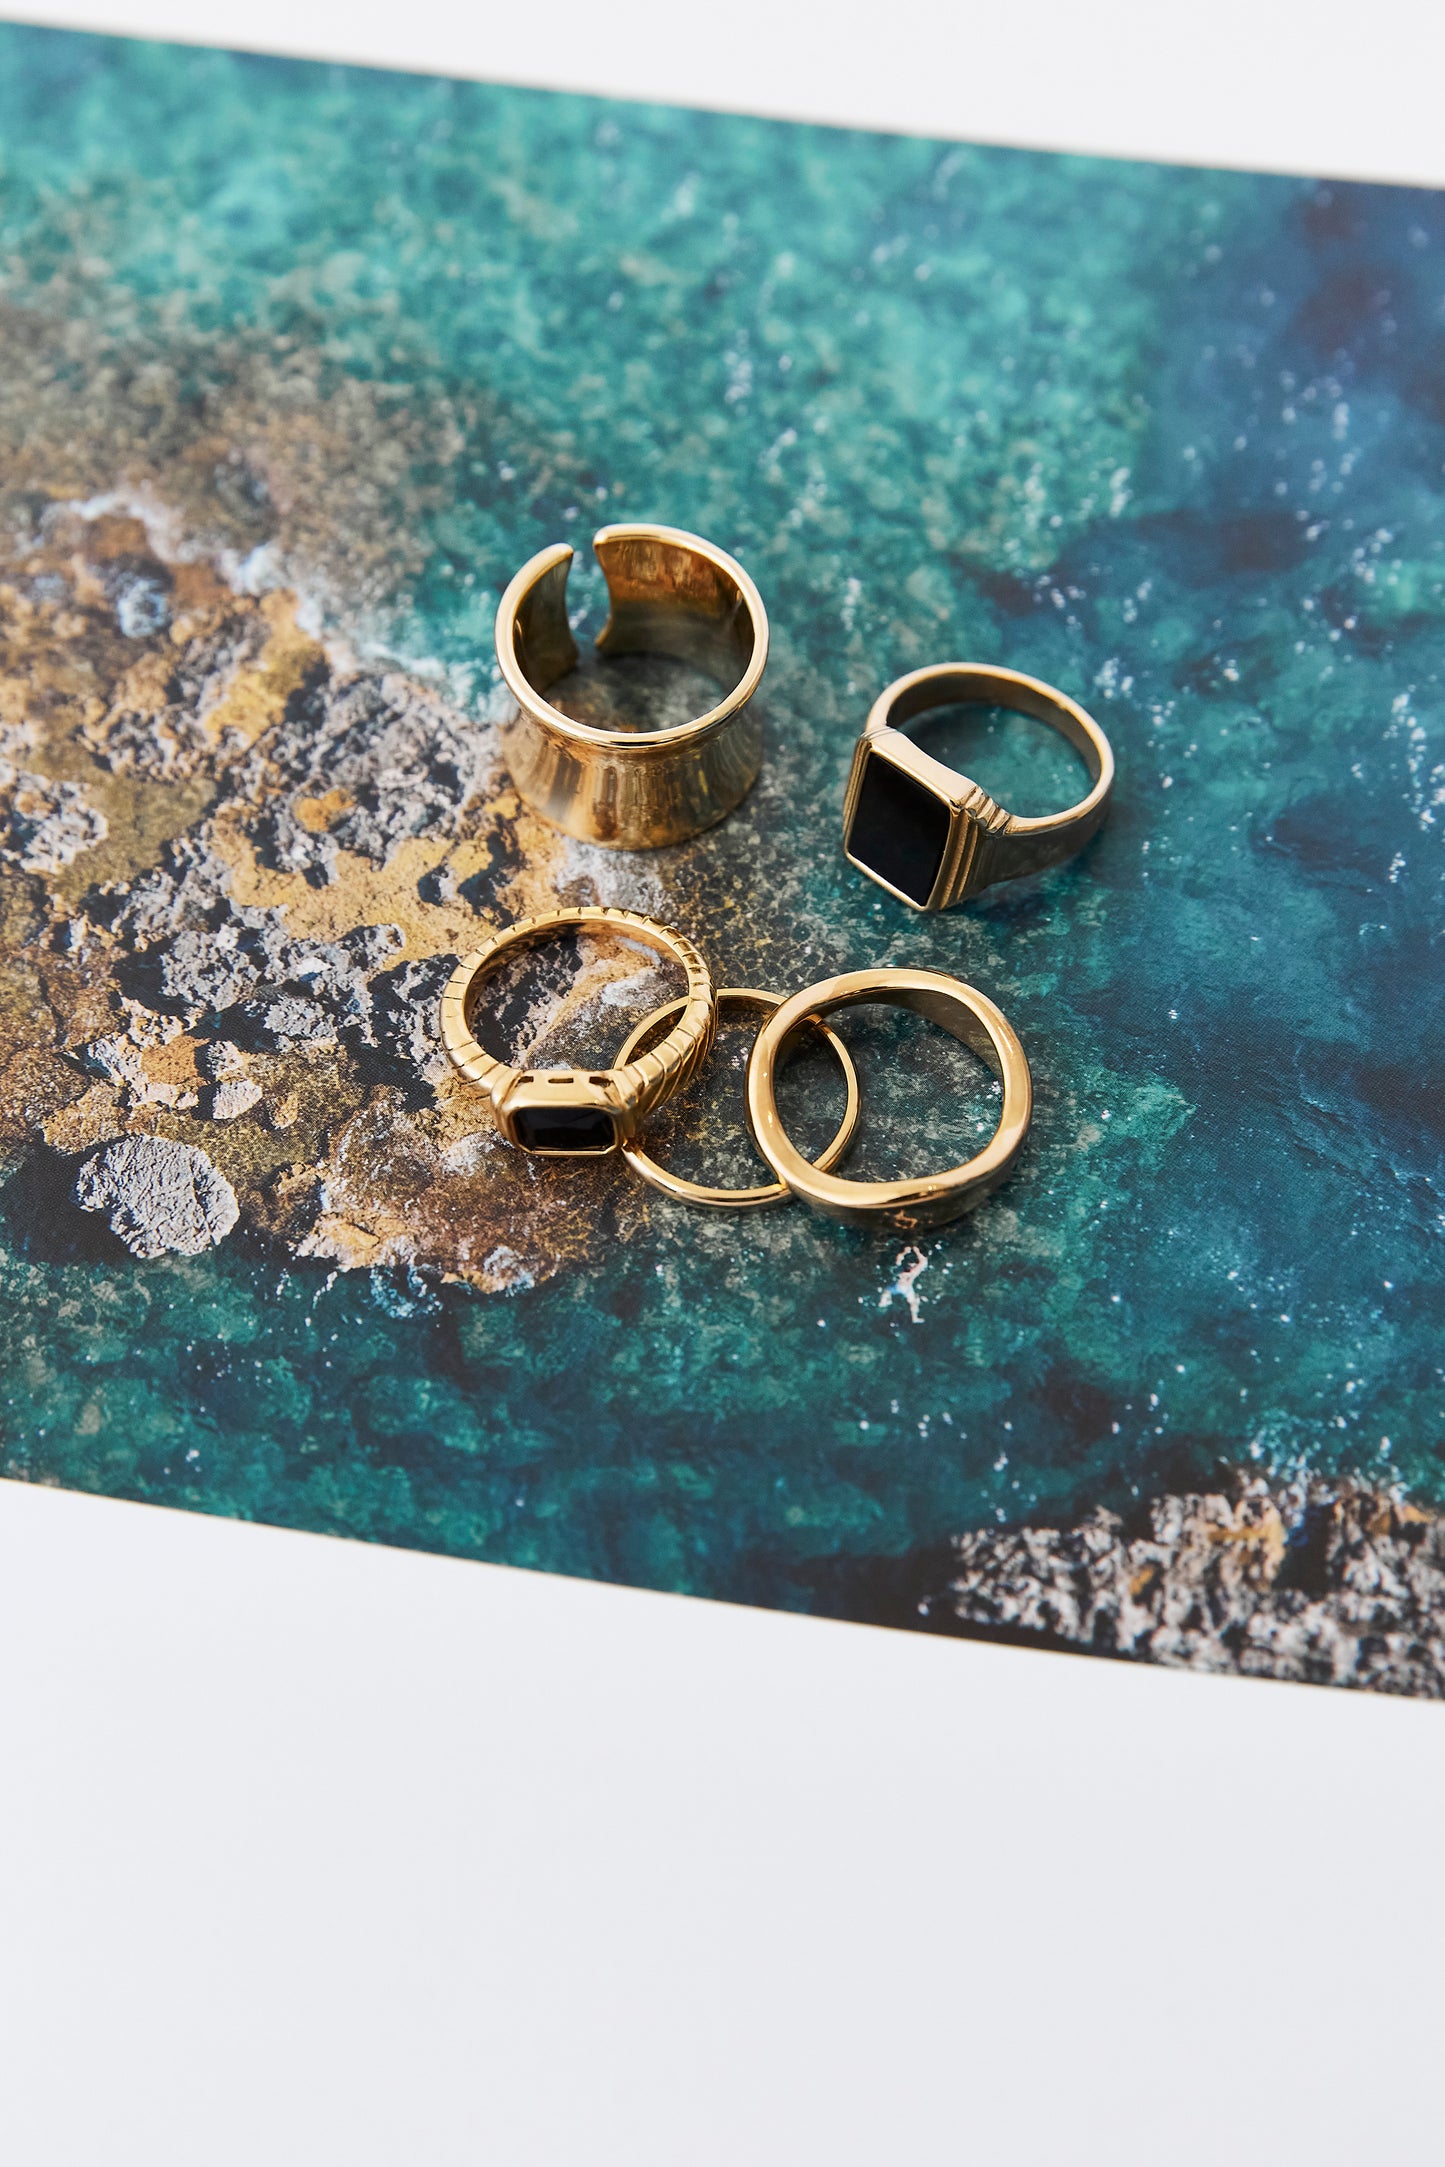 Aiya Gold and Black Signet Ring